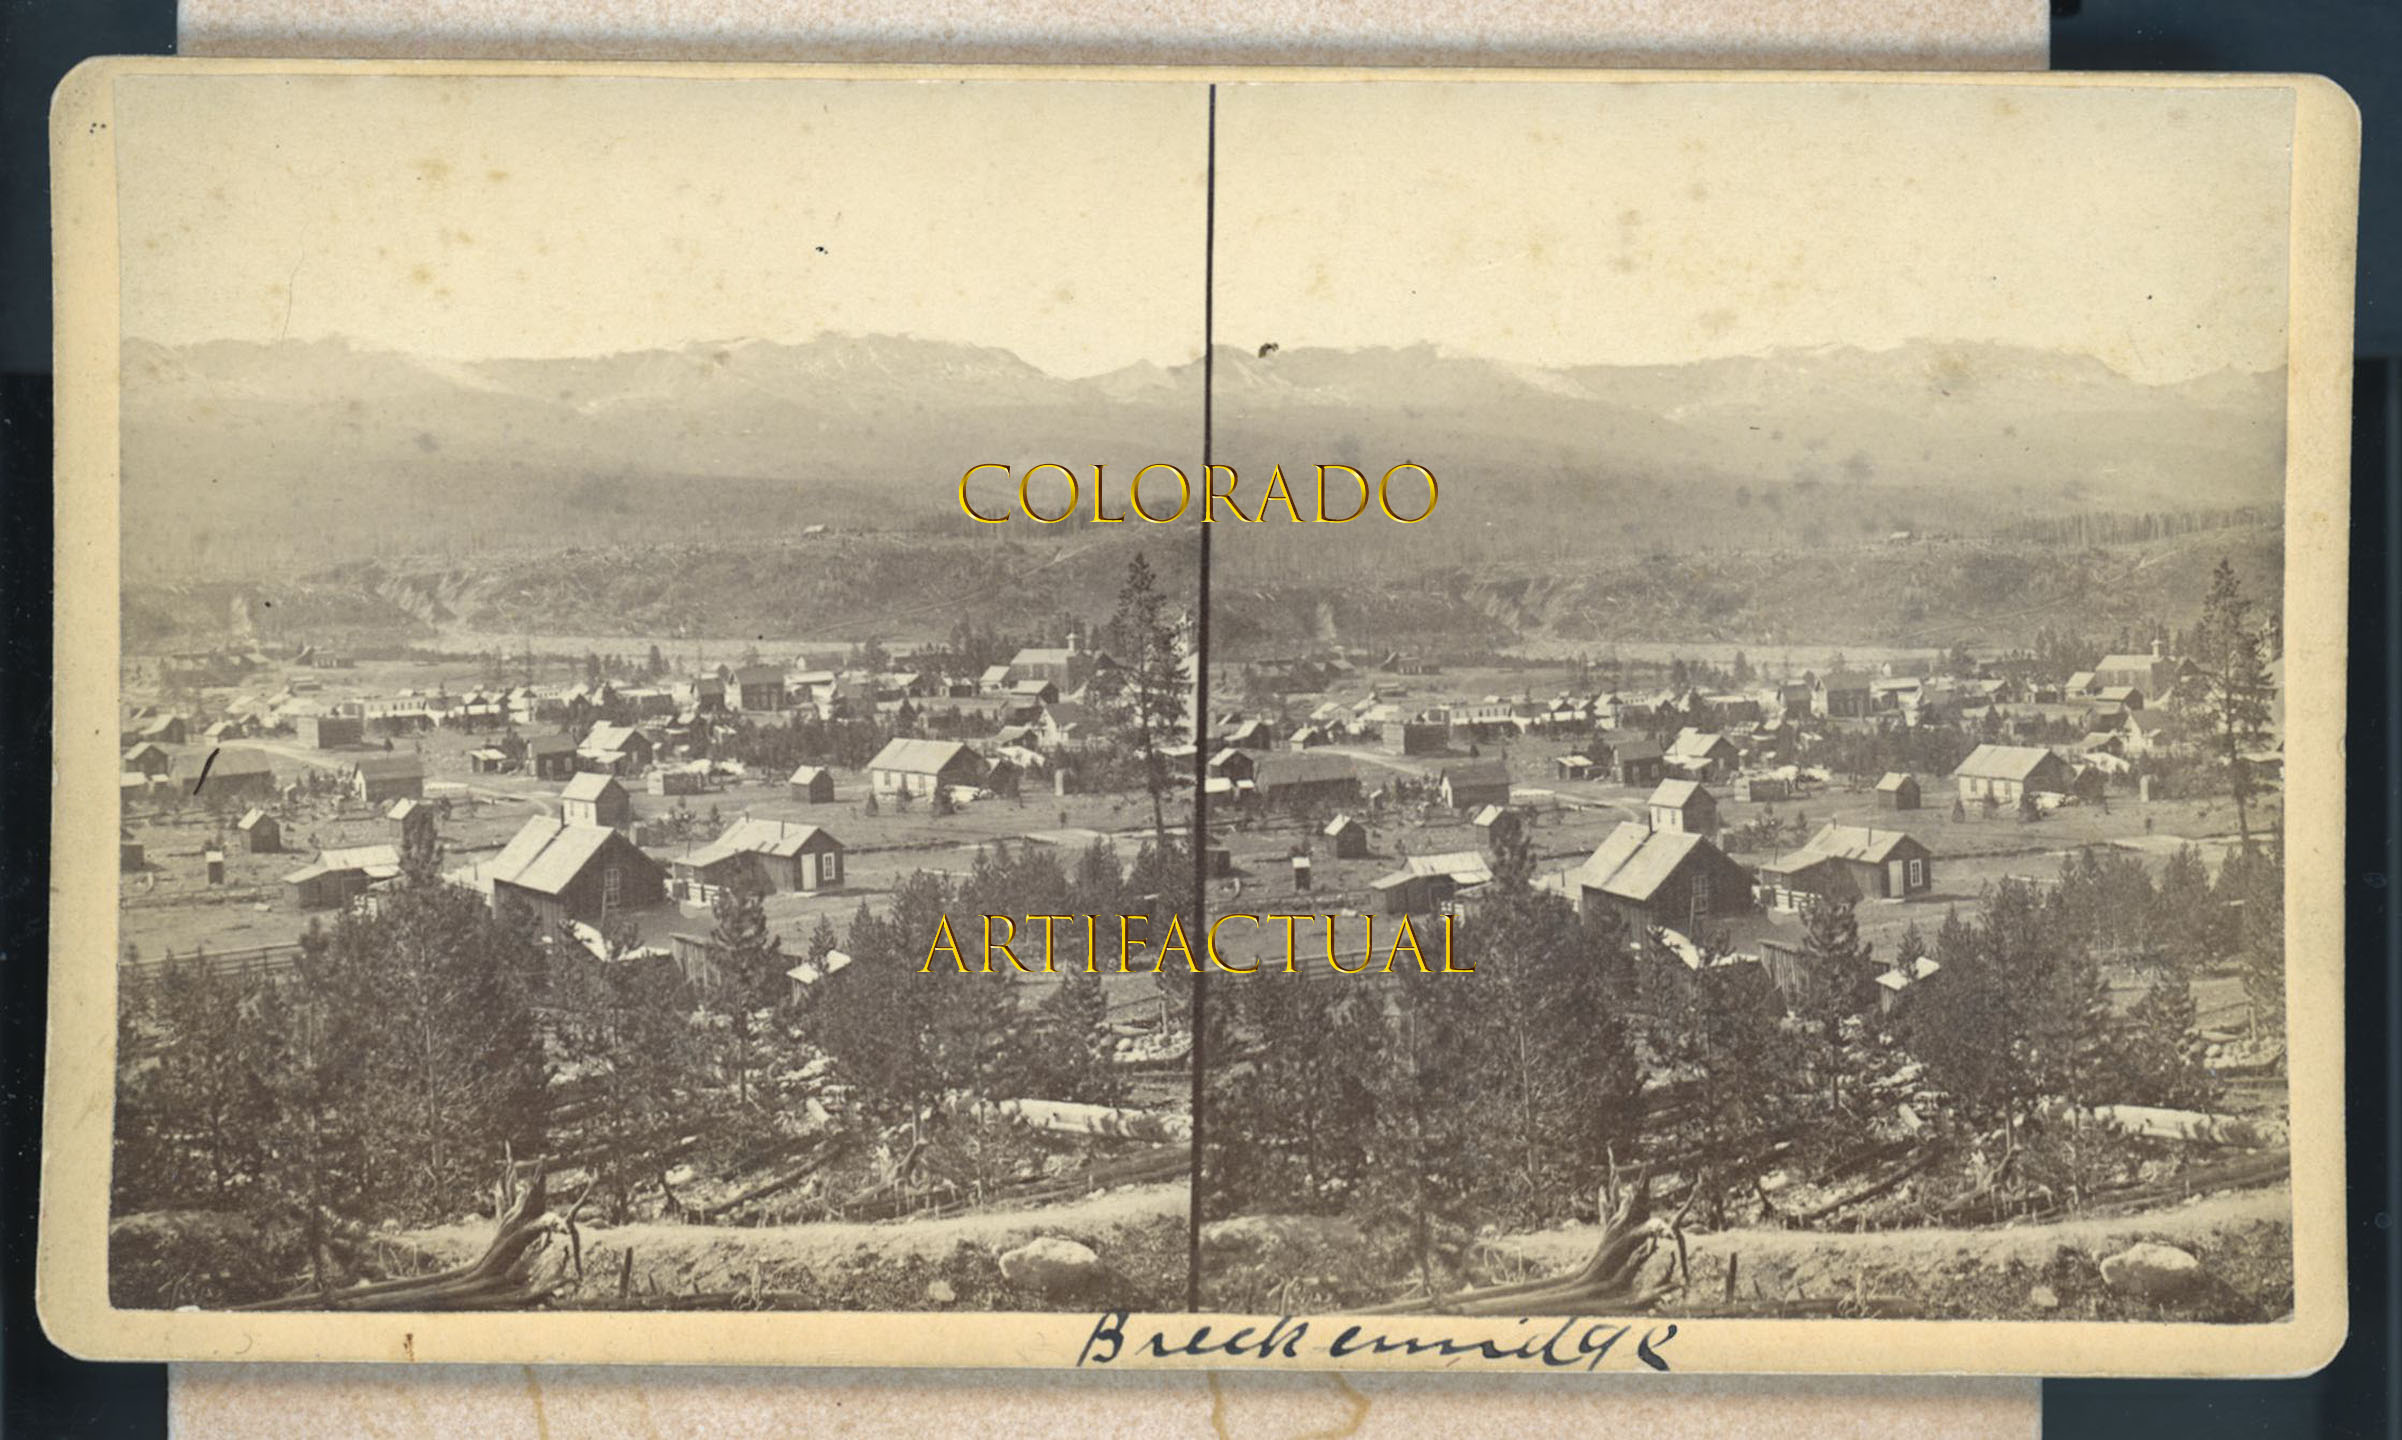 BRECKENRIDGE, SUMMIT COUNTY, COLORADO stereo view photograph, W. D. Churchell bird’s-eye-view, 1880